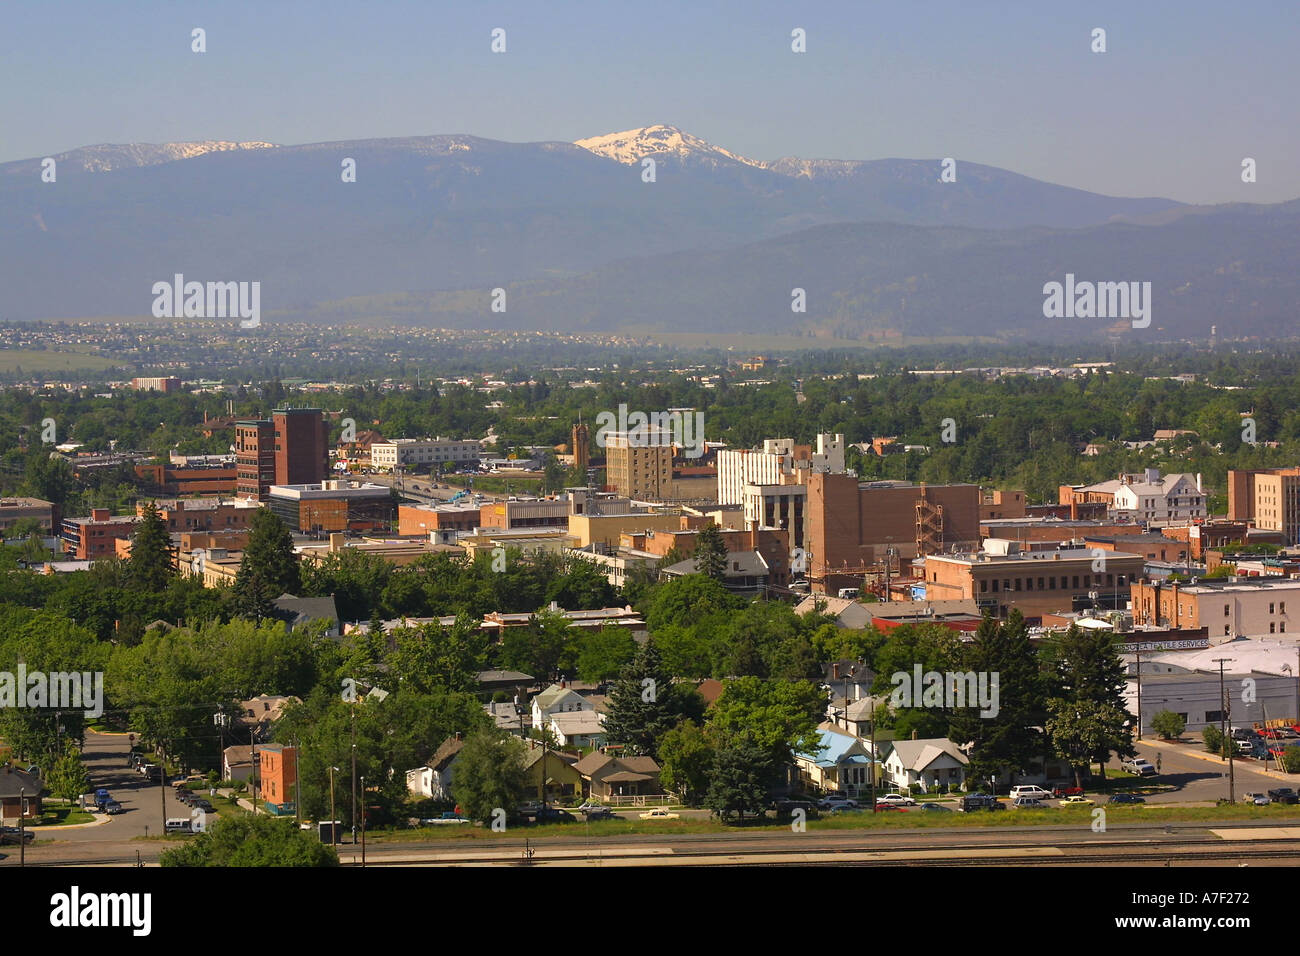 Missoula Montana USA skyline Stock Photo - Alamy